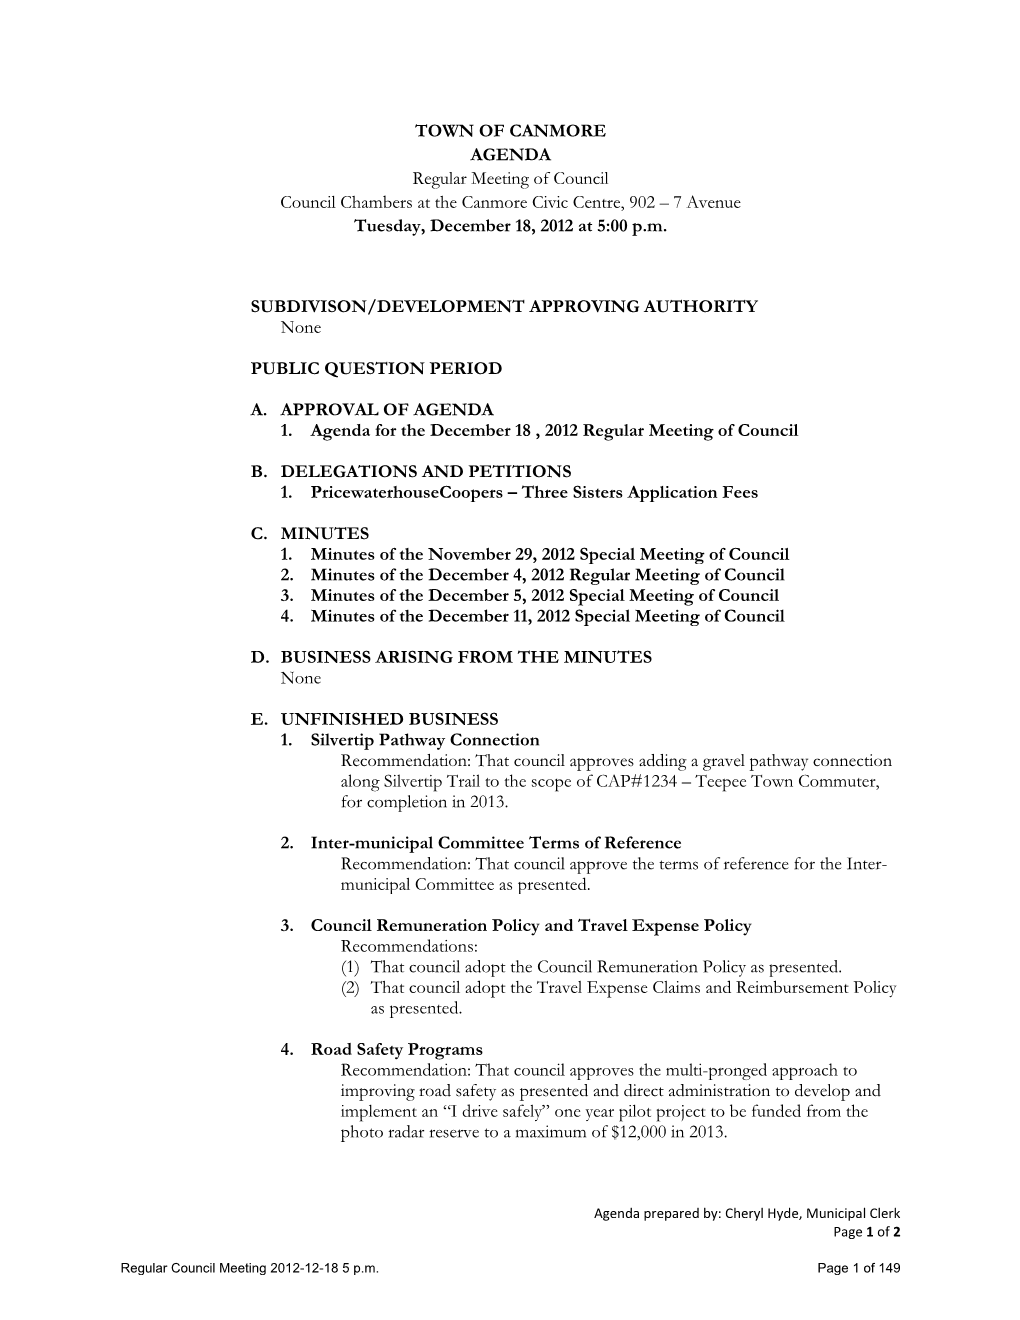 Council Agenda 2012-12-18